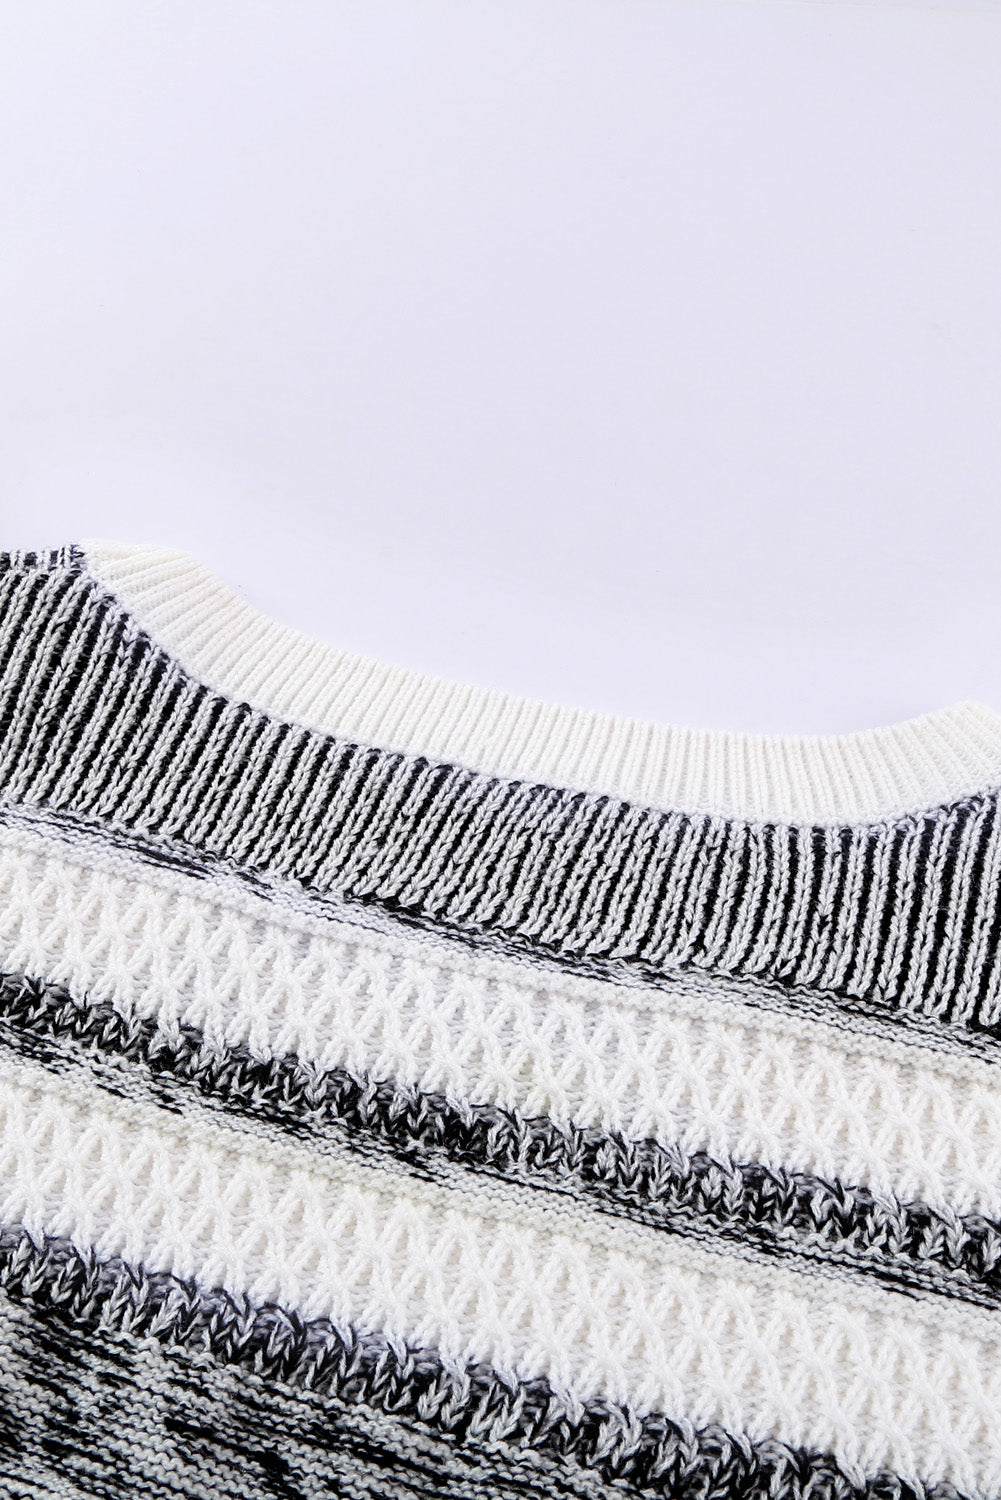 White Black Striped Pullover Knit Sweater